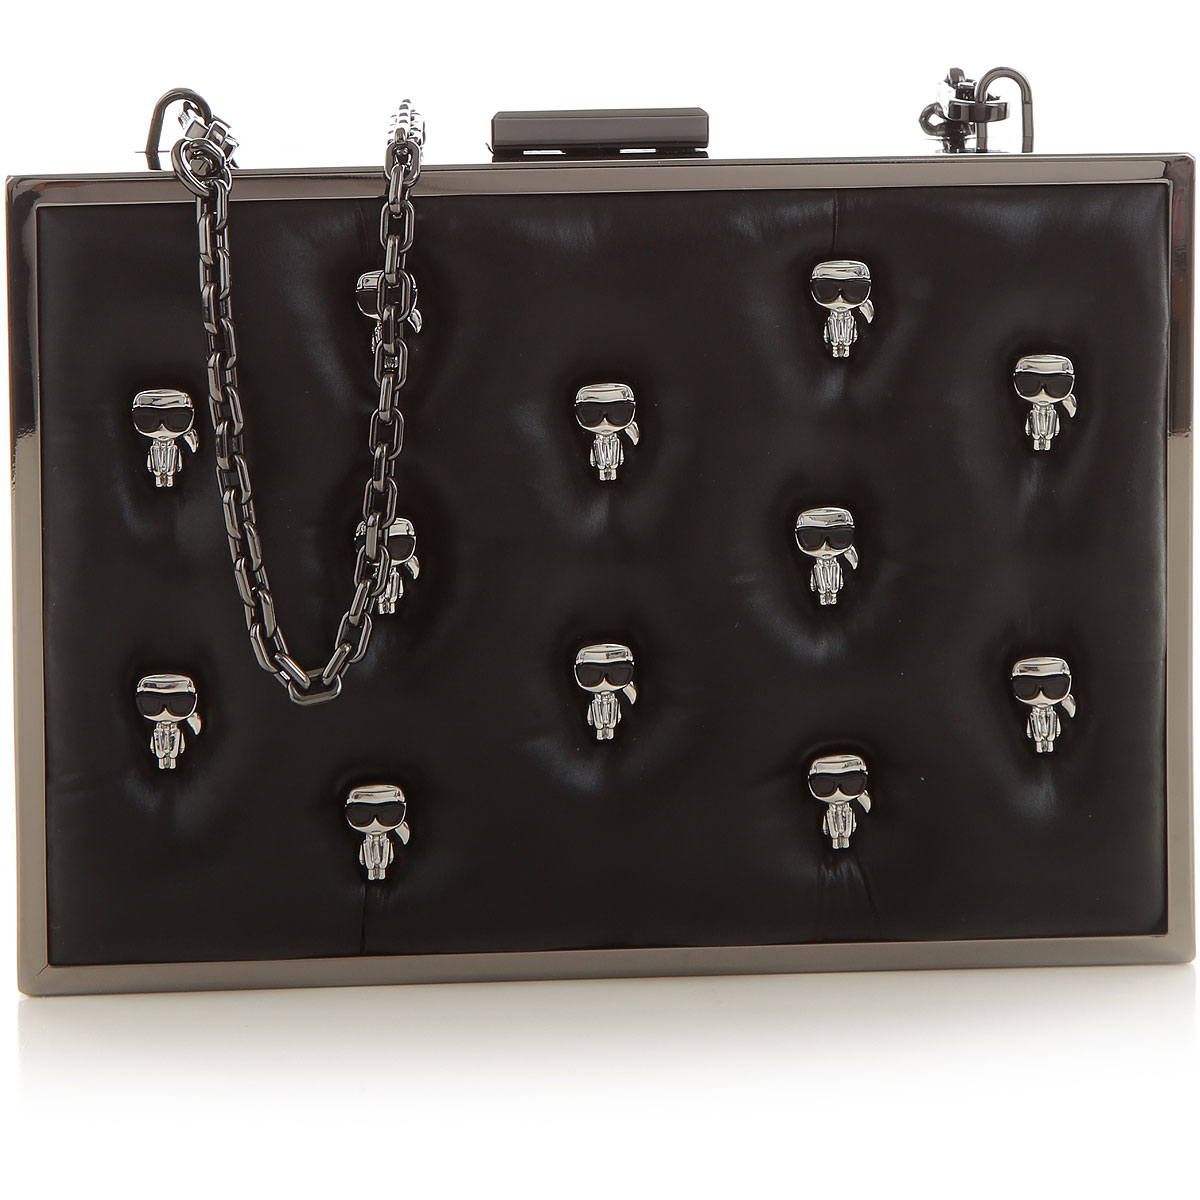 Handbags Karl Lagerfeld, Style code: 210w3196-a980